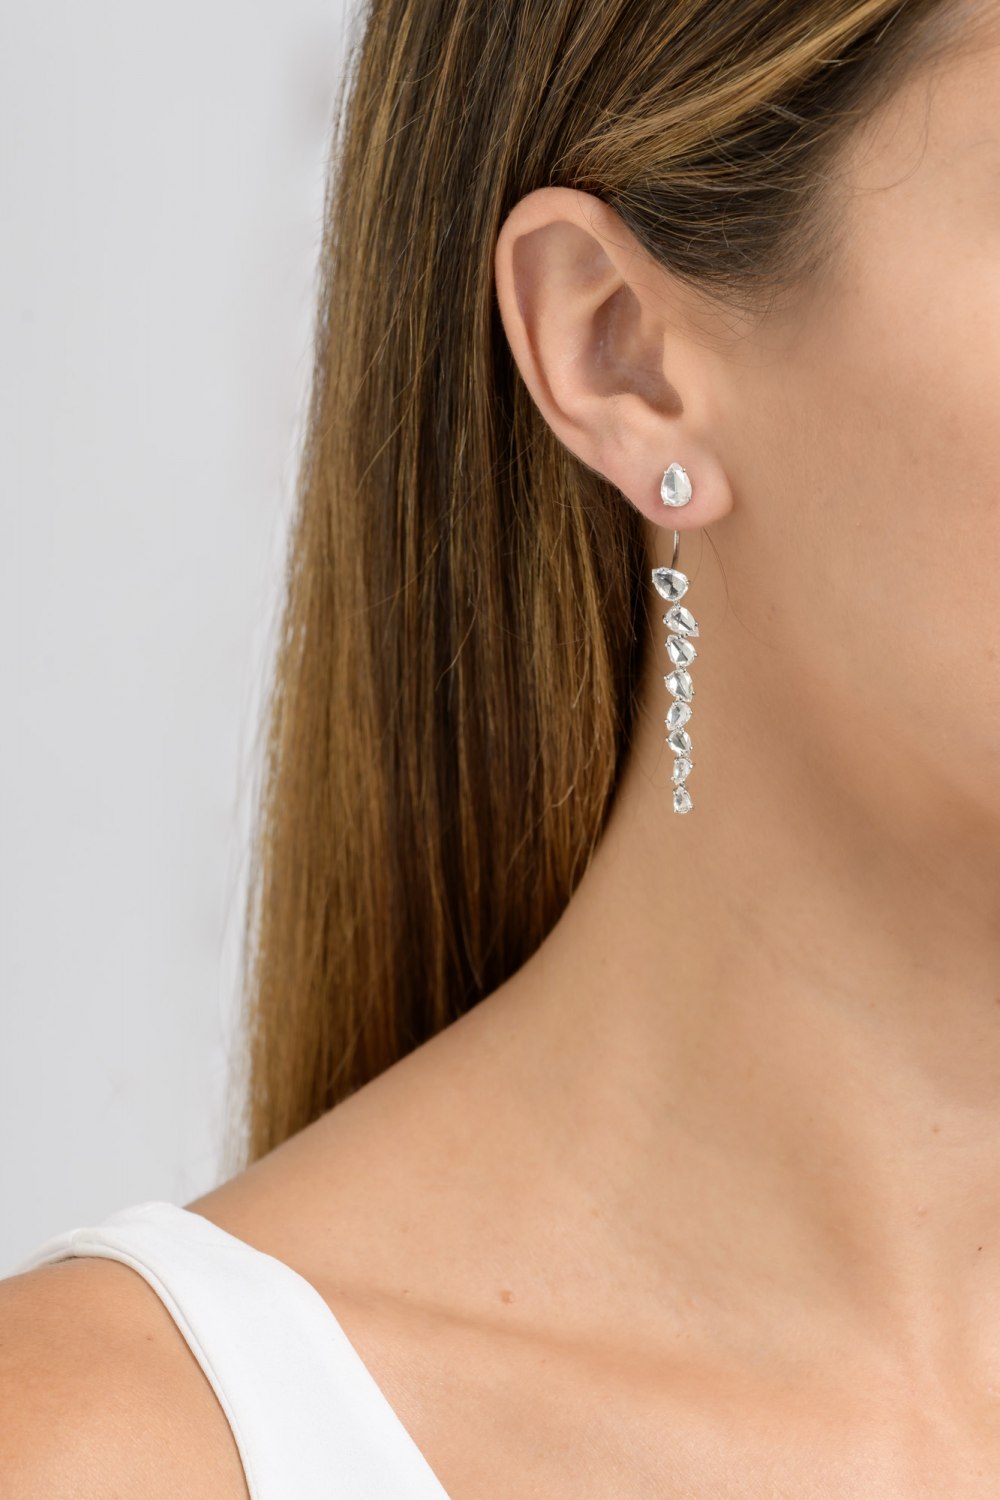 Kessaris-Staurino-Diamond Dangle Earrings